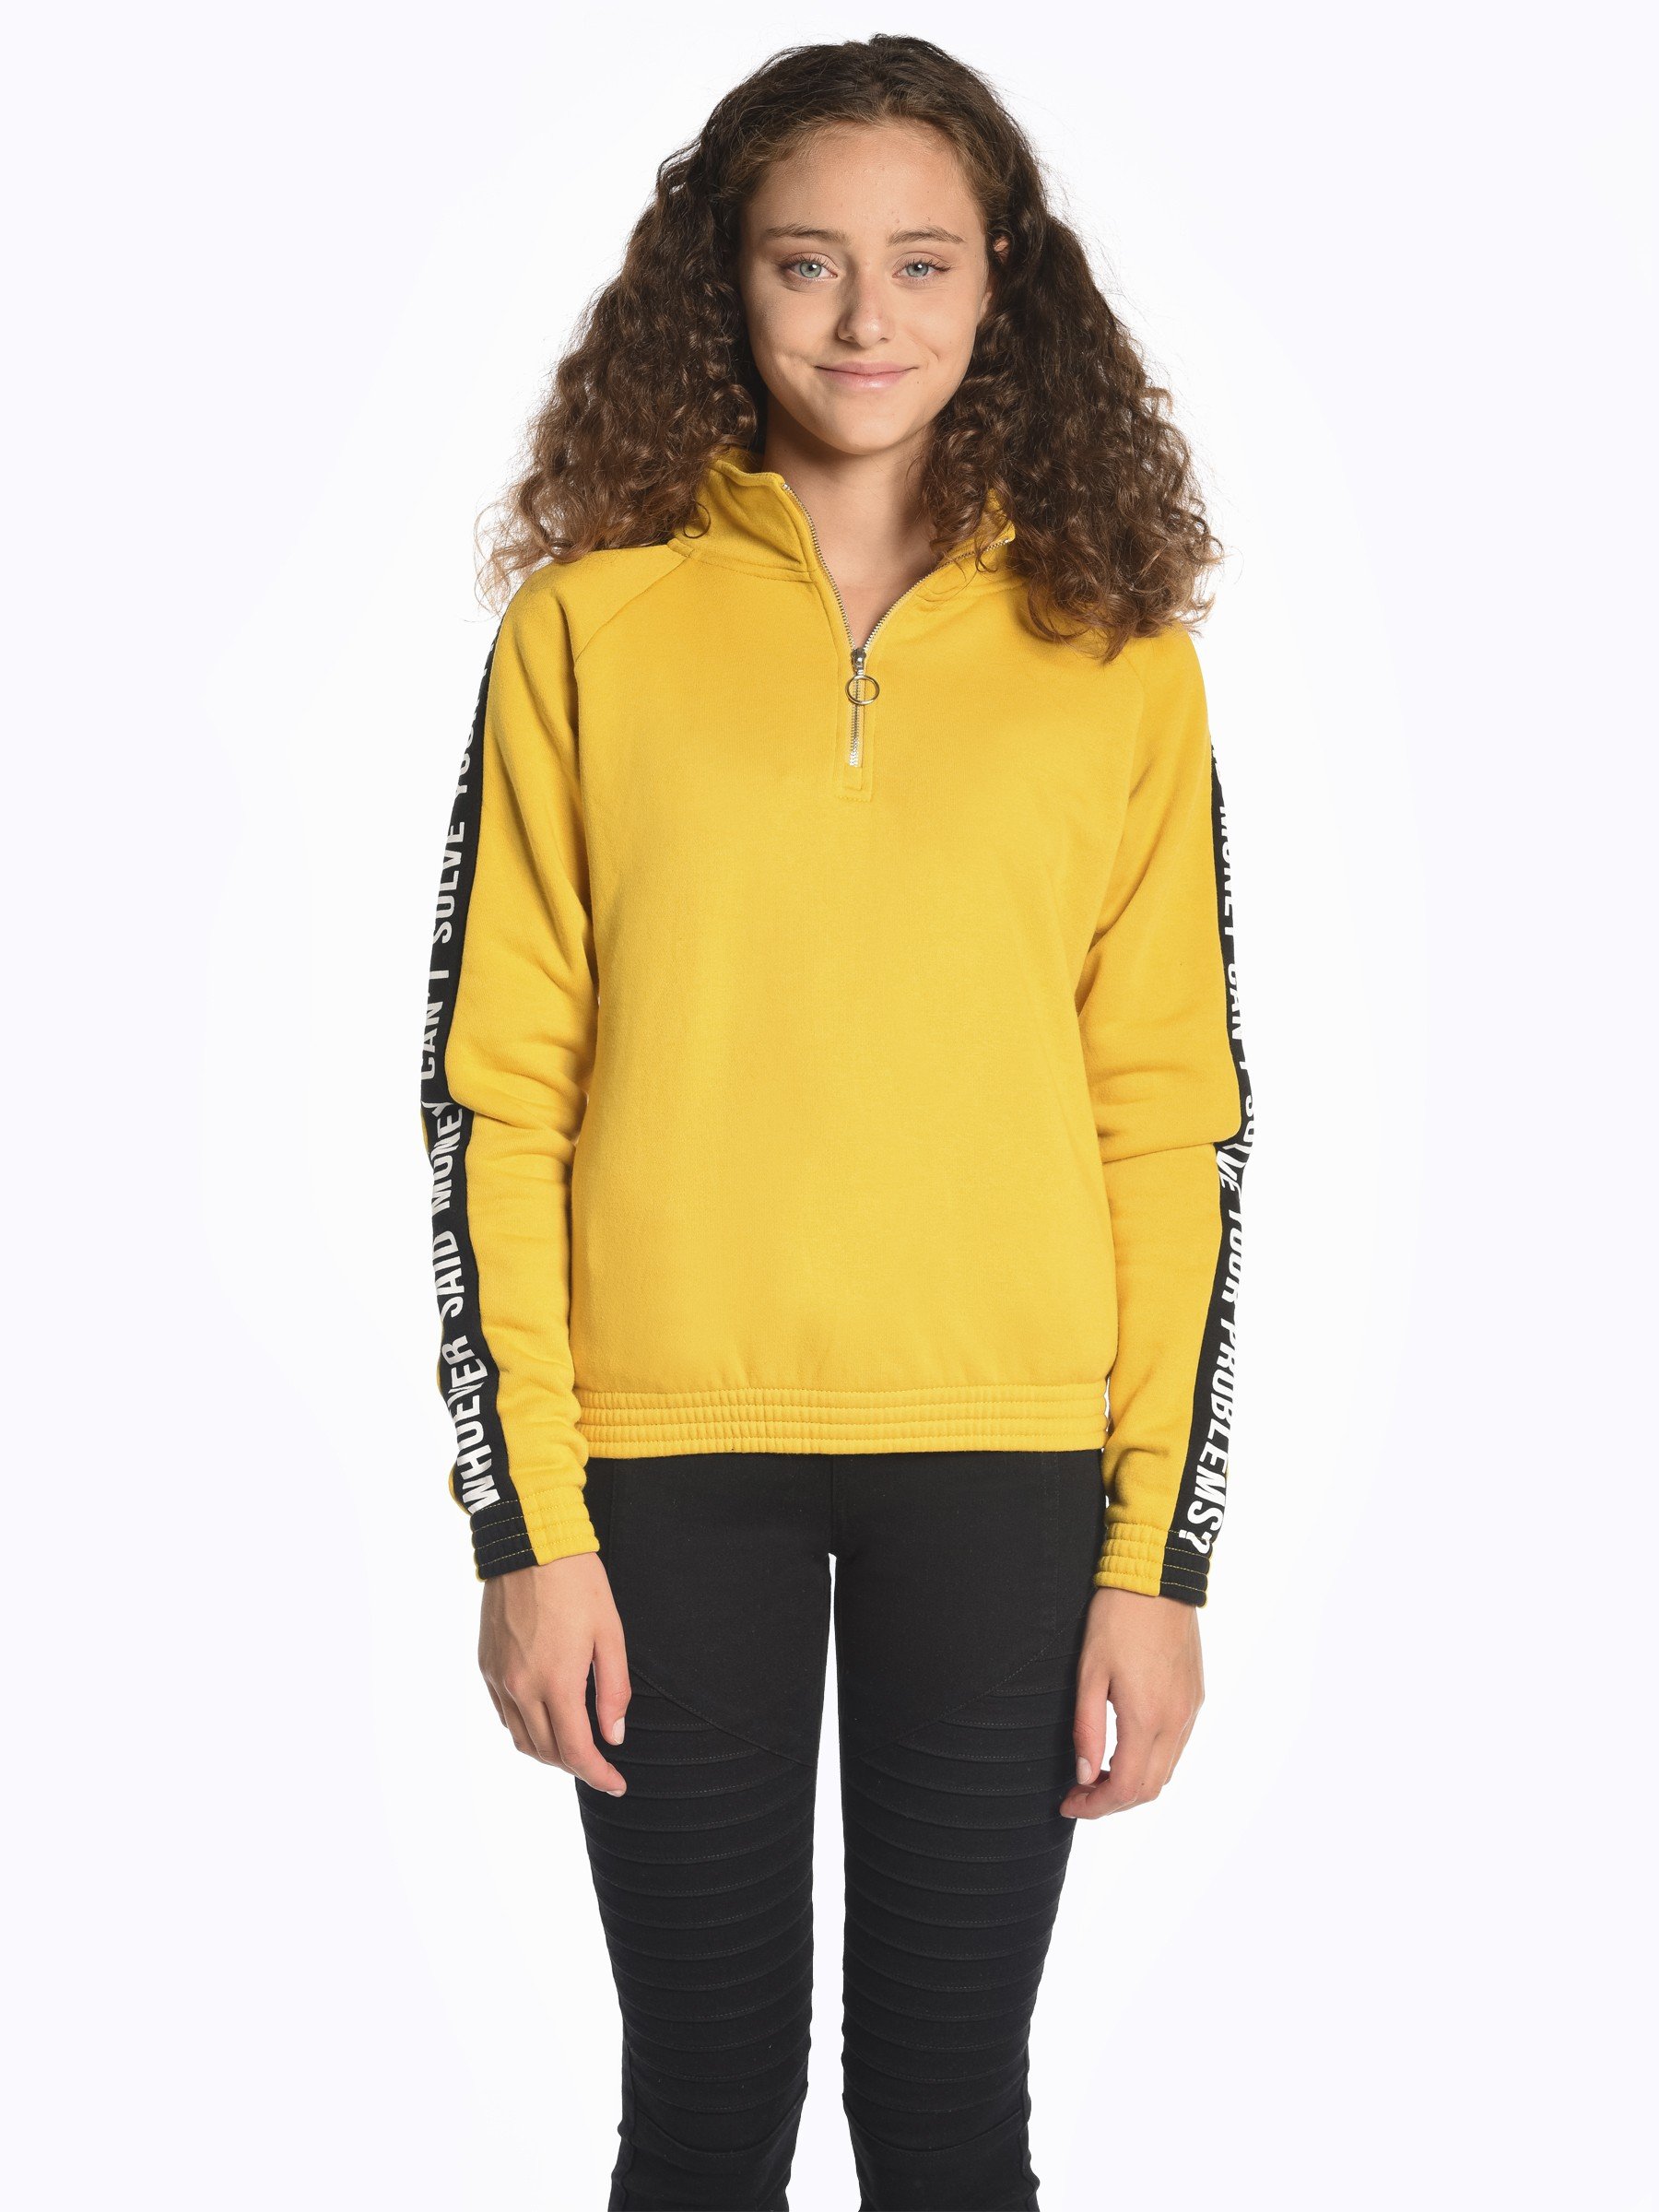 yellow taping sweatshirt